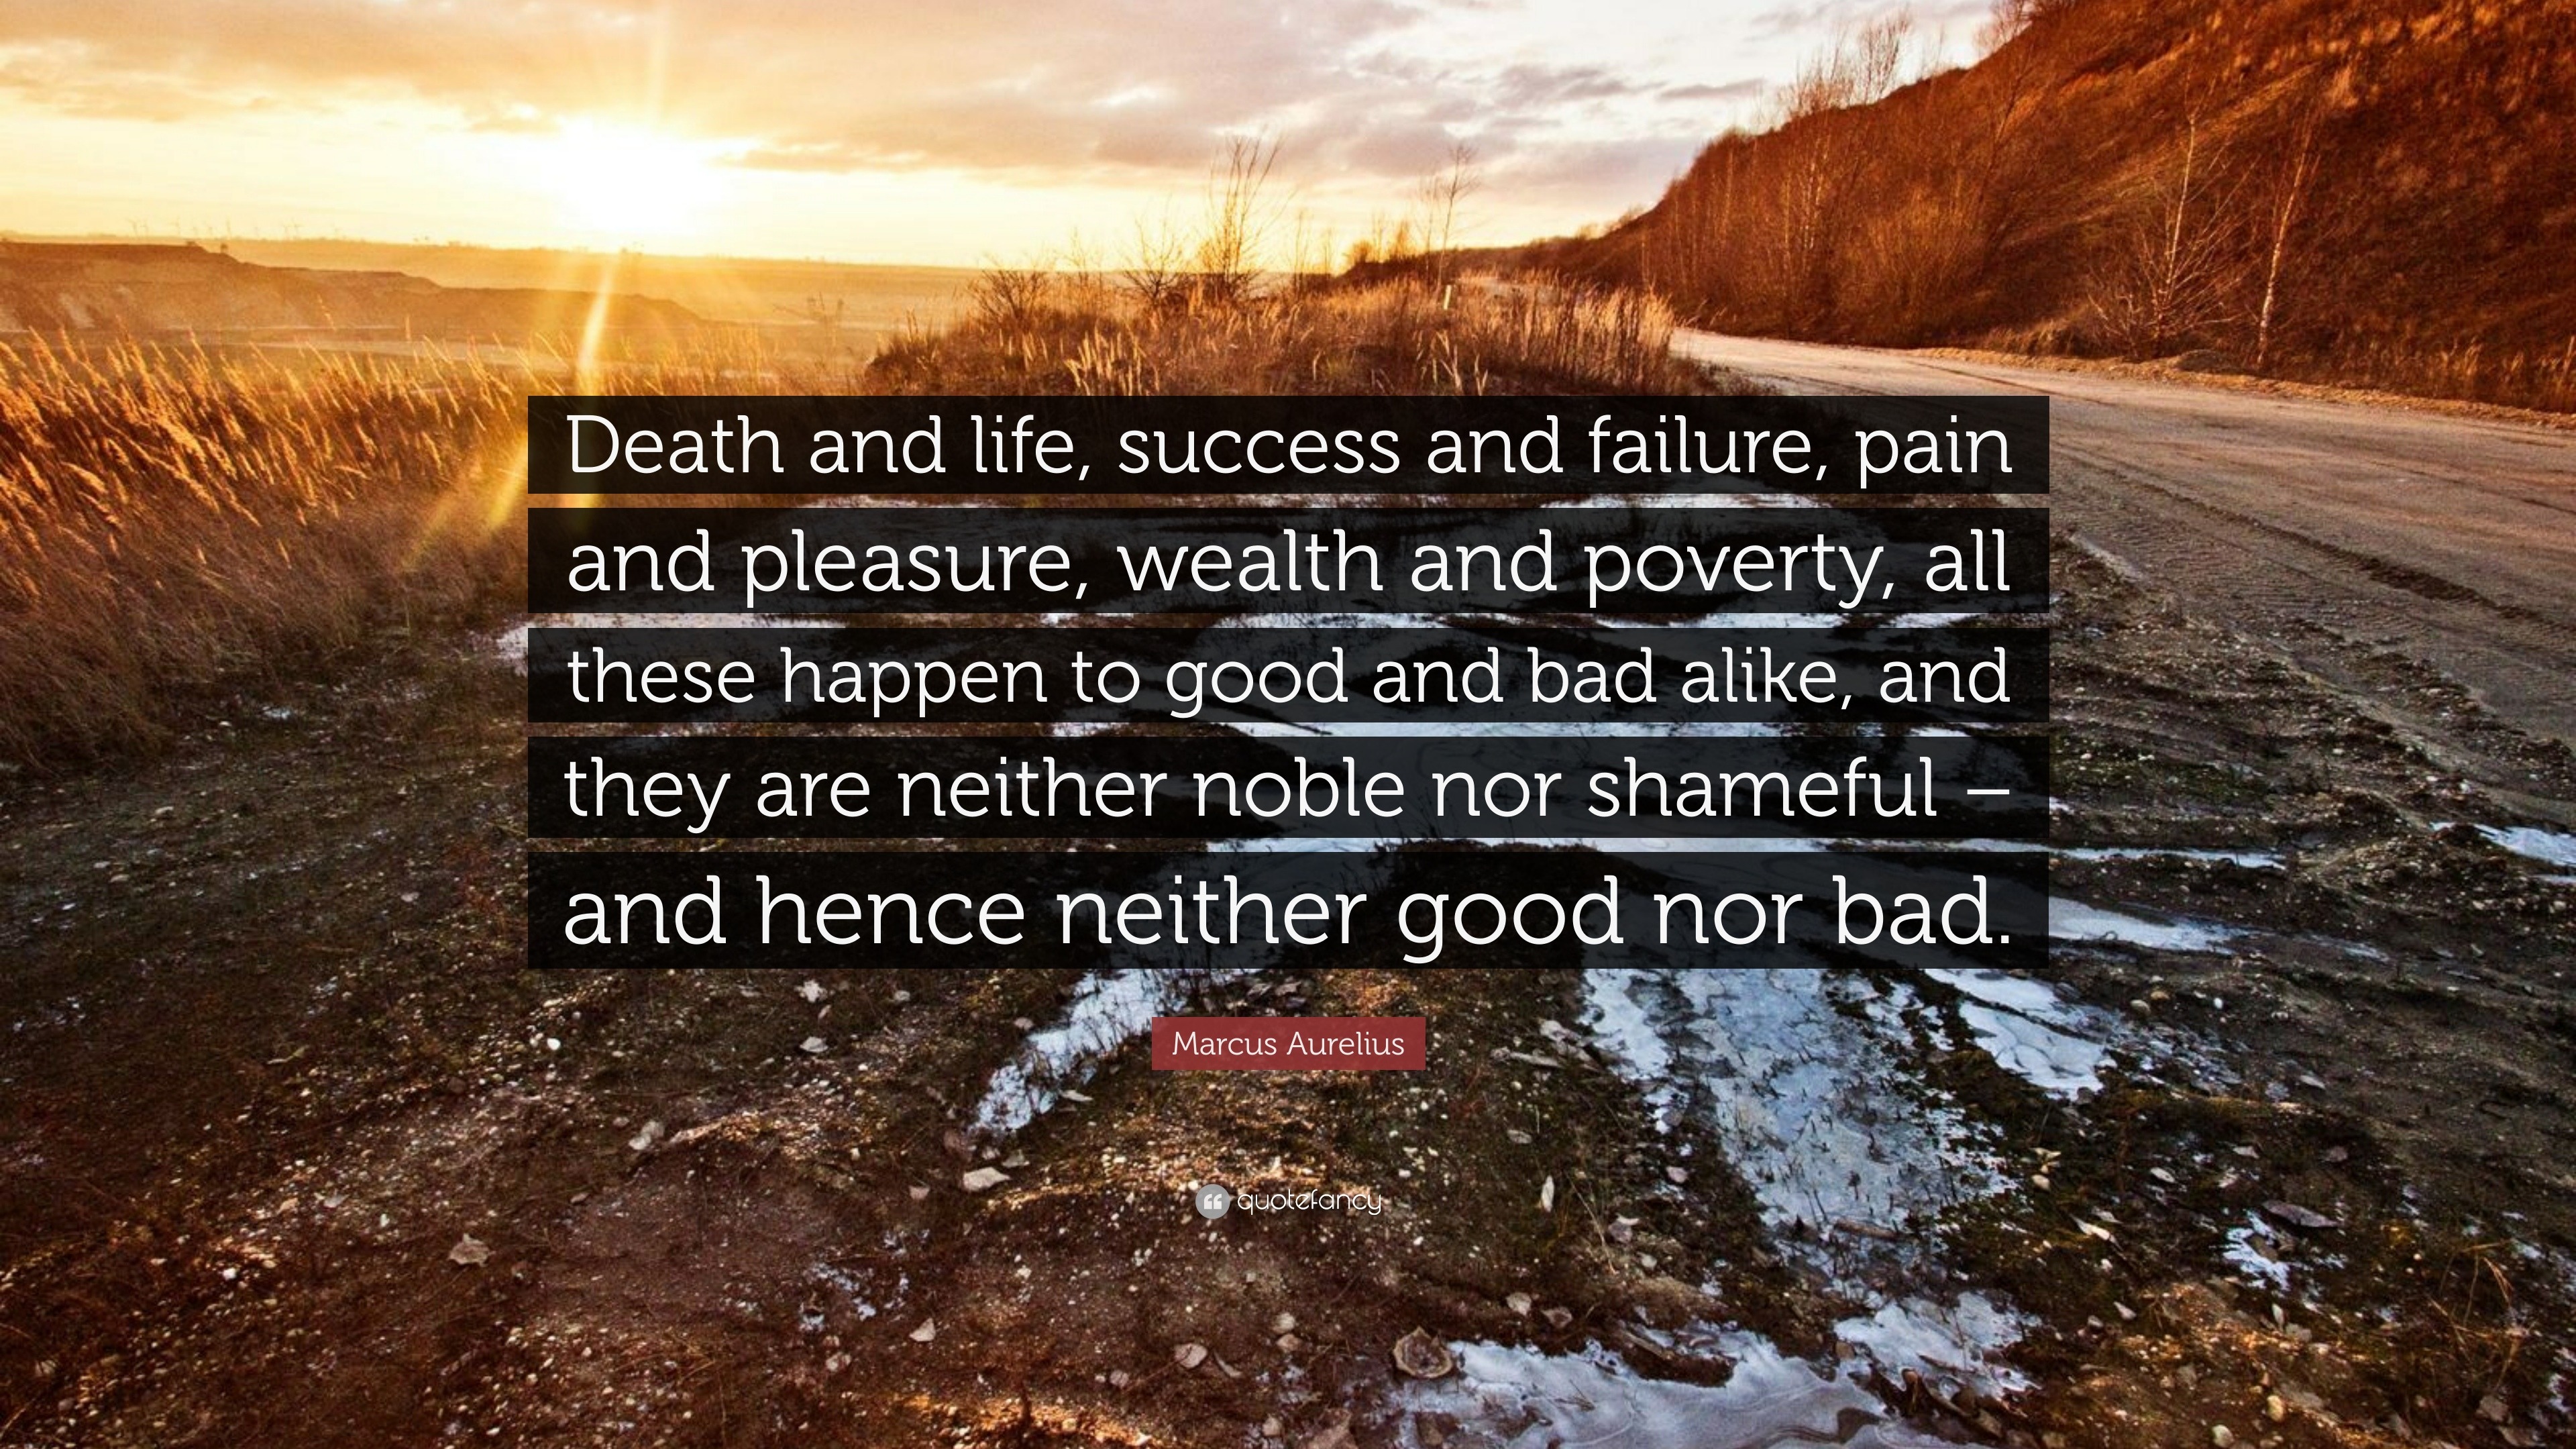 Marcus Aurelius Quote “Death and life success and failure pain and pleasure